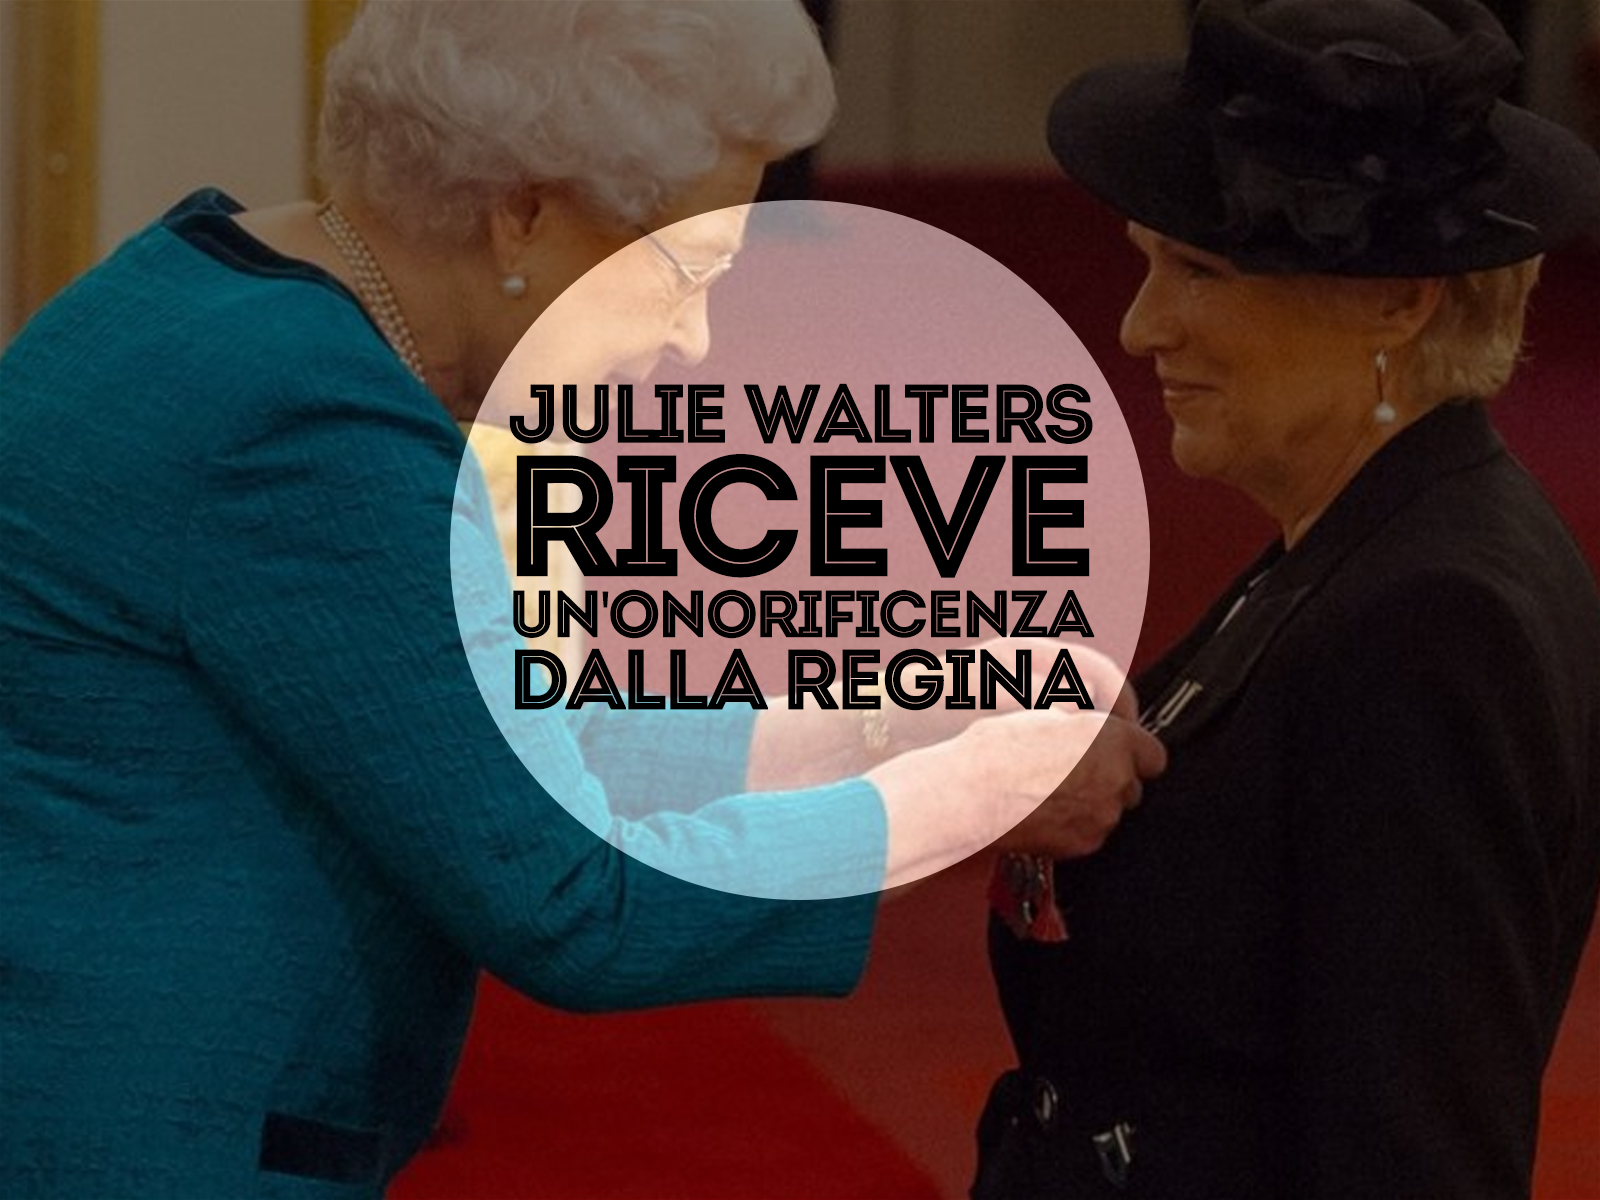 Julie Walters riceve un'onorificenza dalla regina